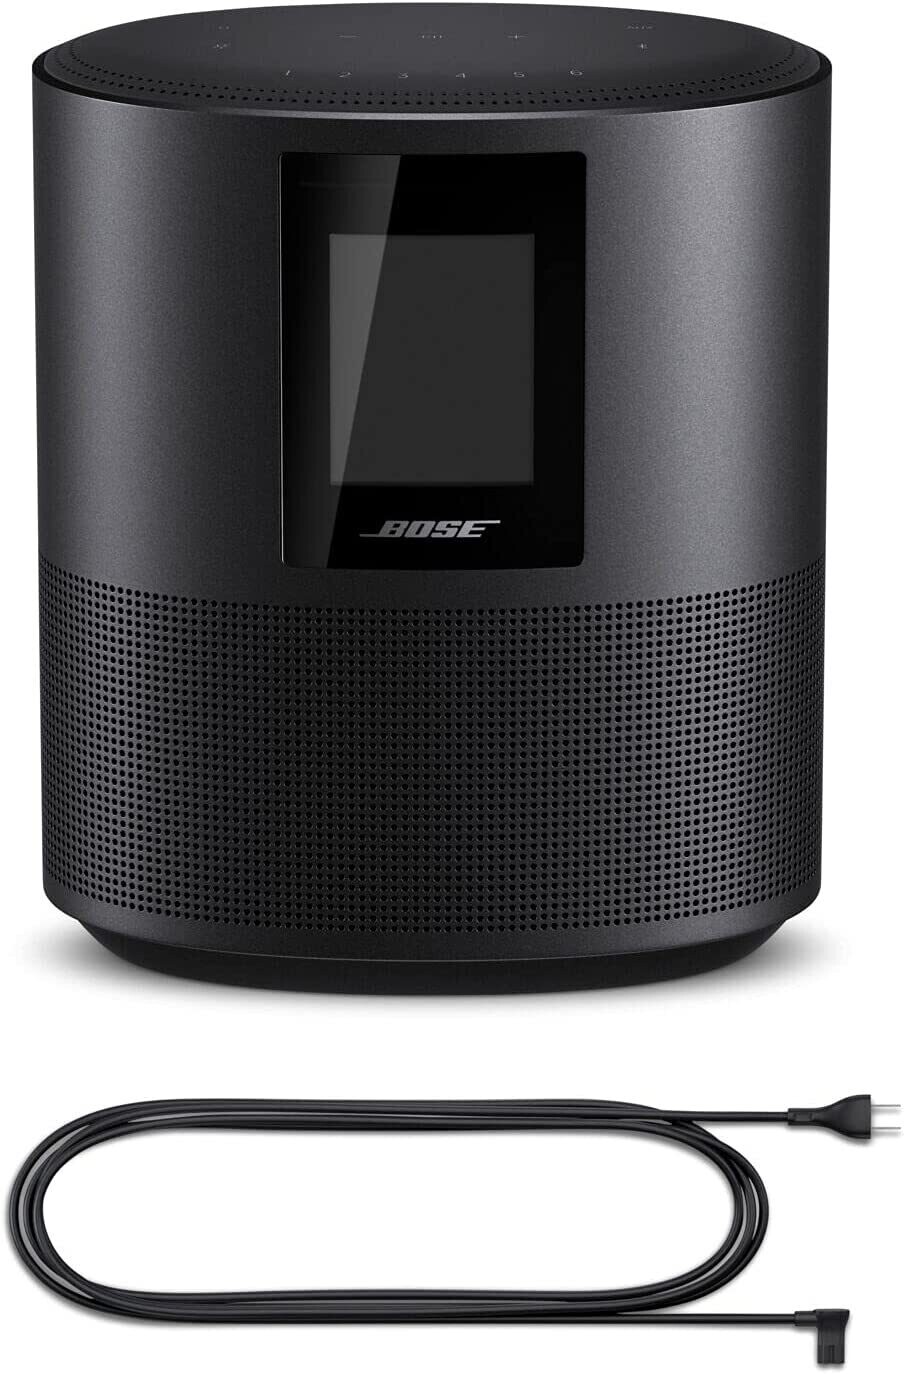 Bose Home Speaker 500: Smart Bluetooth Speaker with Alexa Voice Control Built-In (Black)